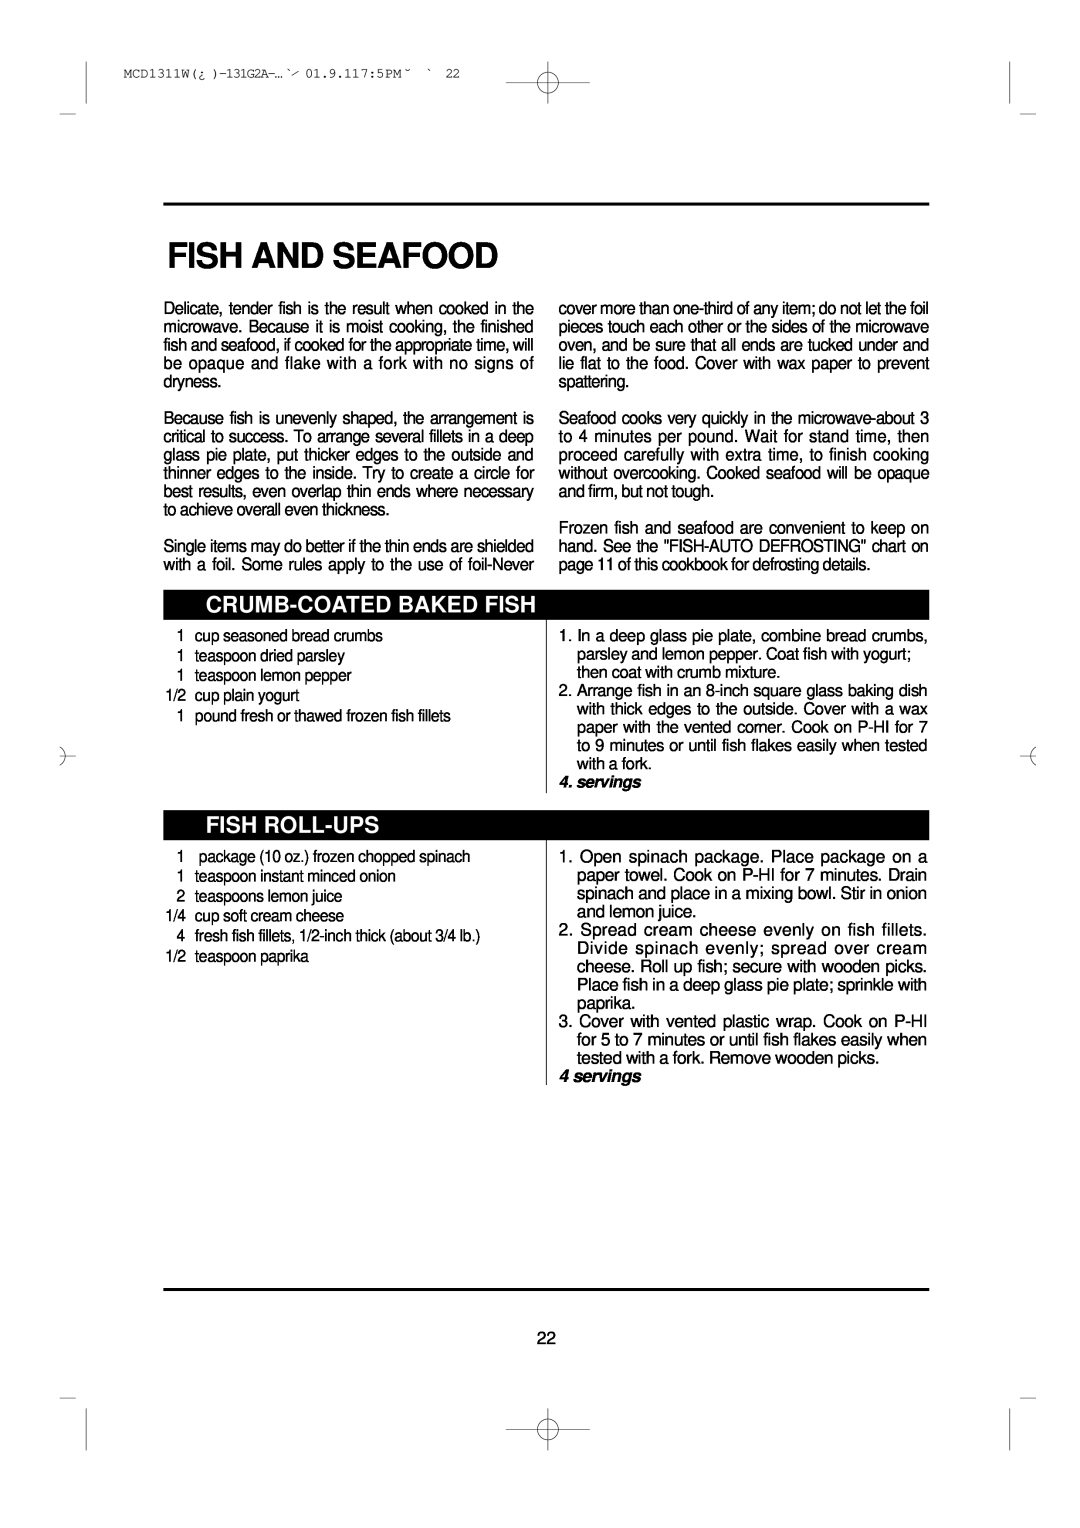 Magic Chef MCD1311W instruction manual Fish And Seafood, Crumb-Coatedbaked Fish, Fish Roll-Ups, servings 